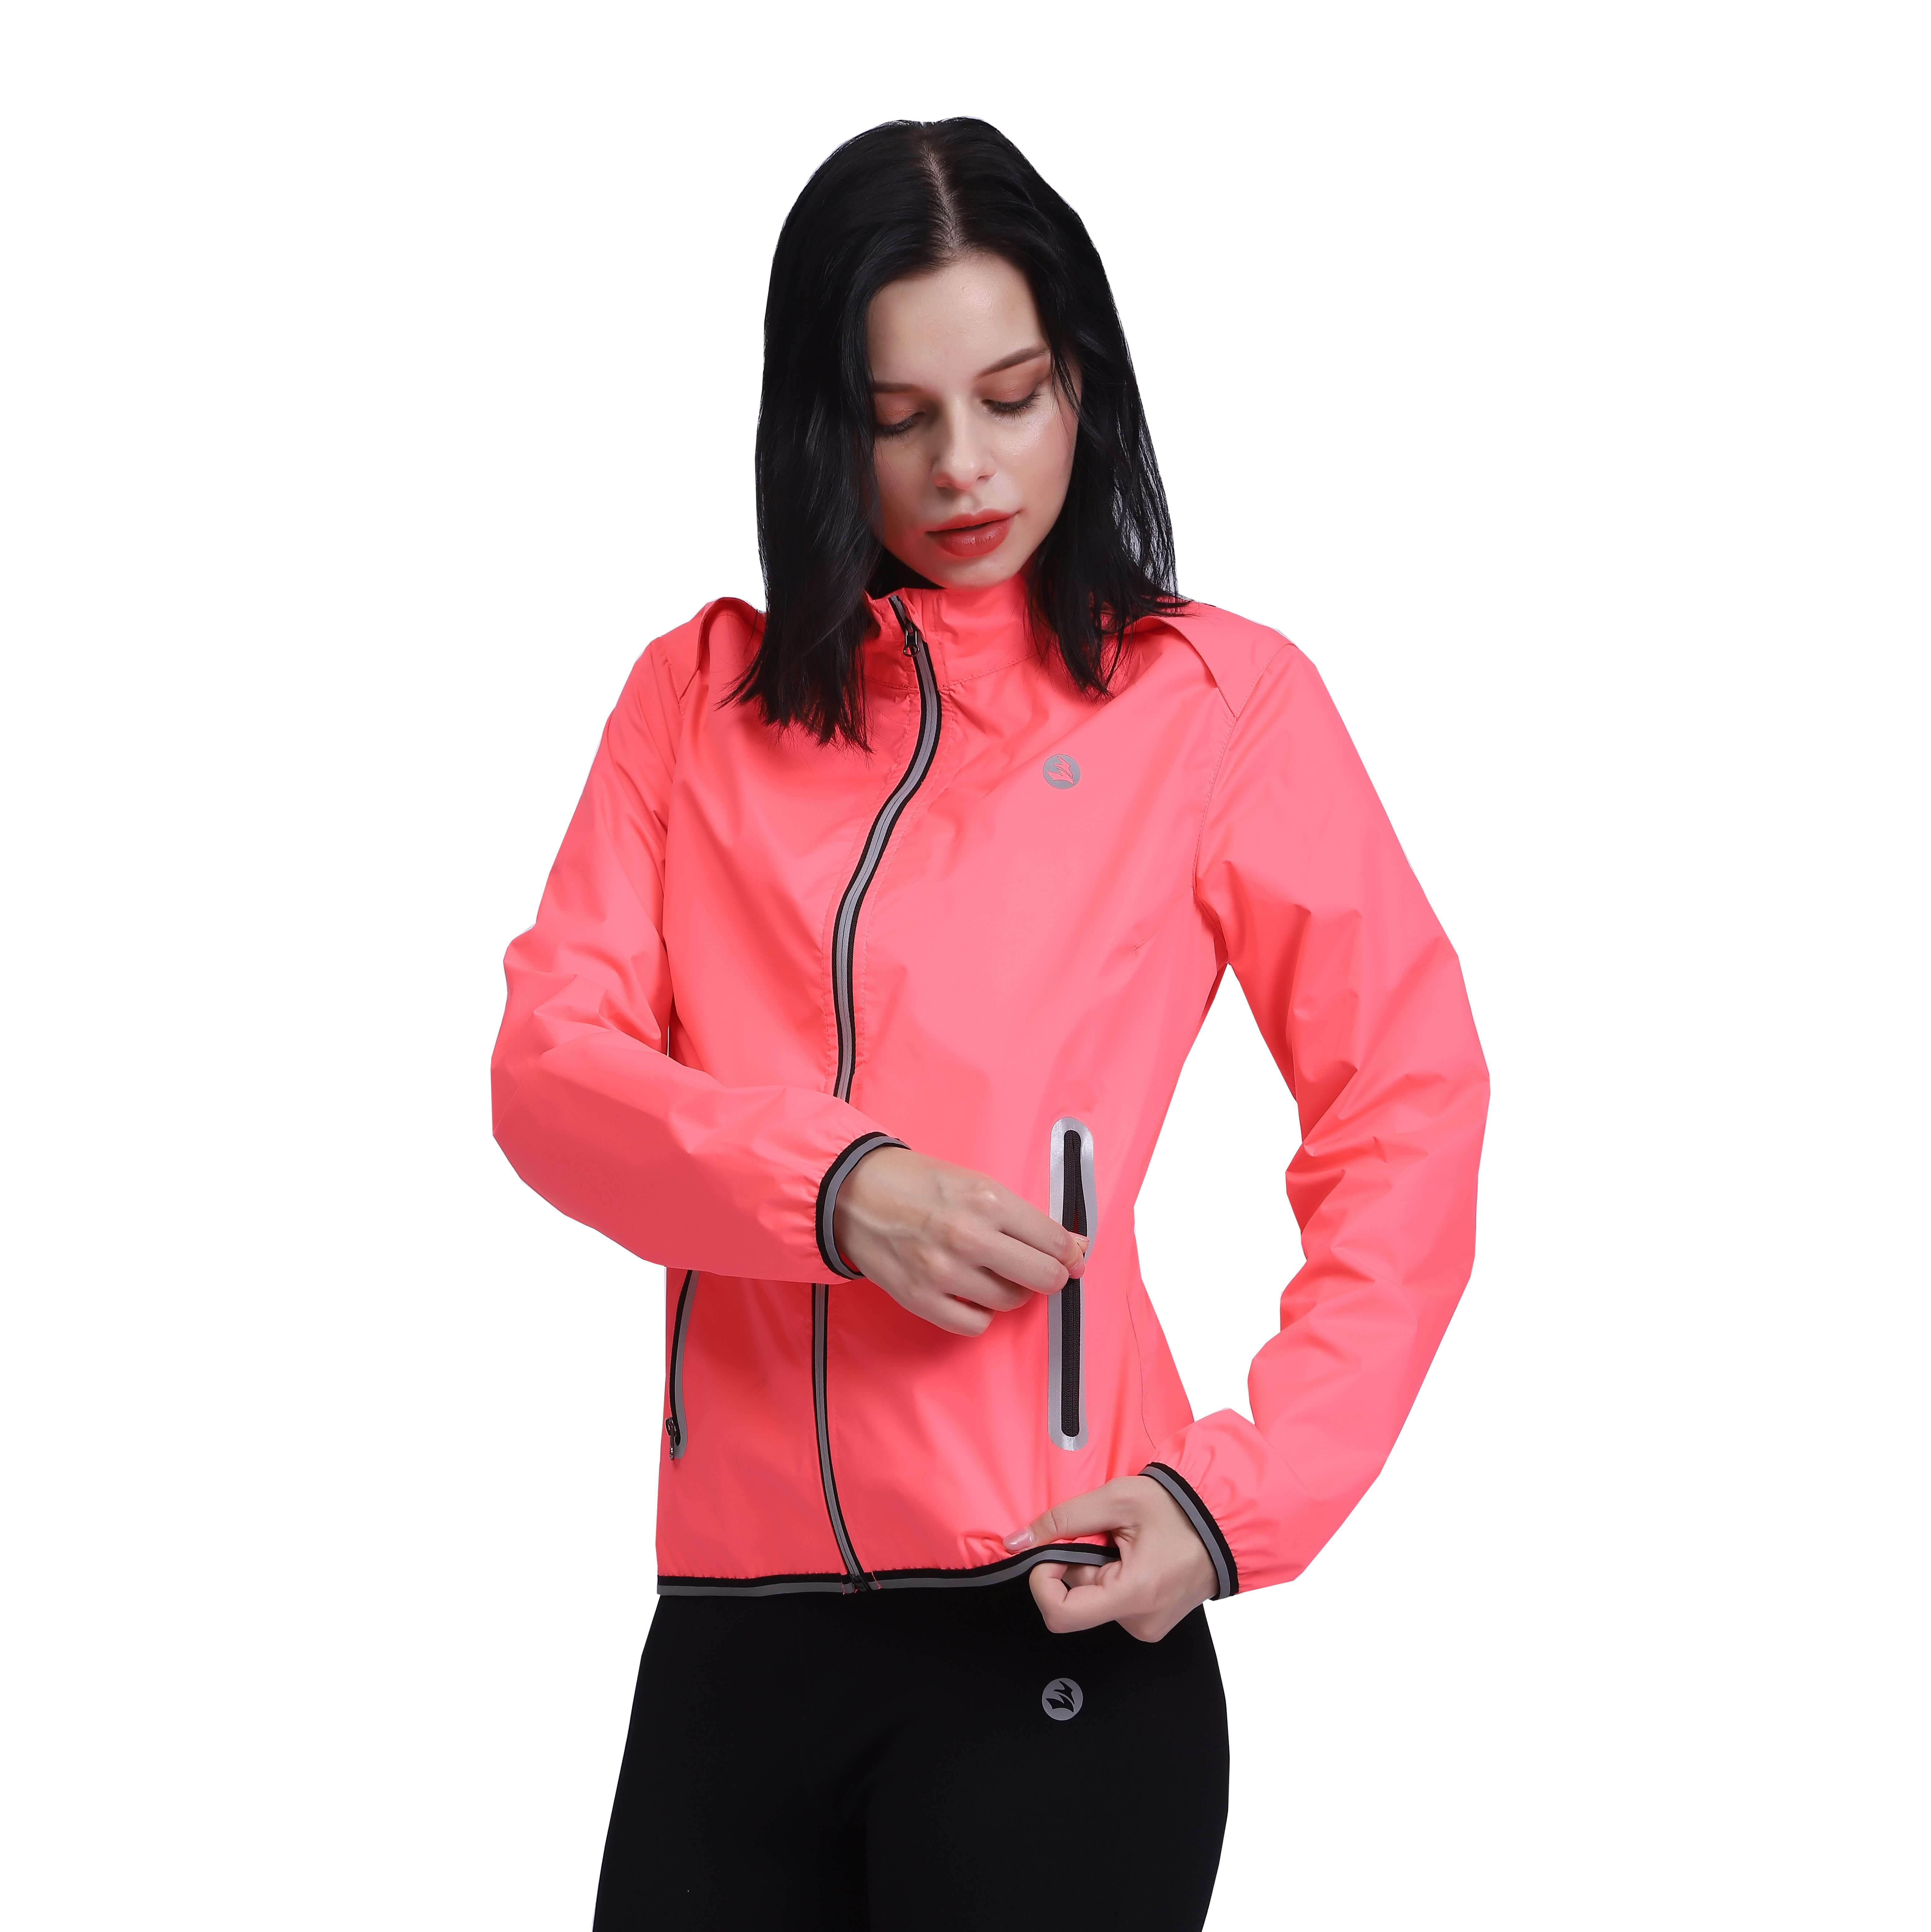 Mujeres a prueba de viento livianos Peso reflectante Atinte Atindo Collar chaqueta con cremallera Top